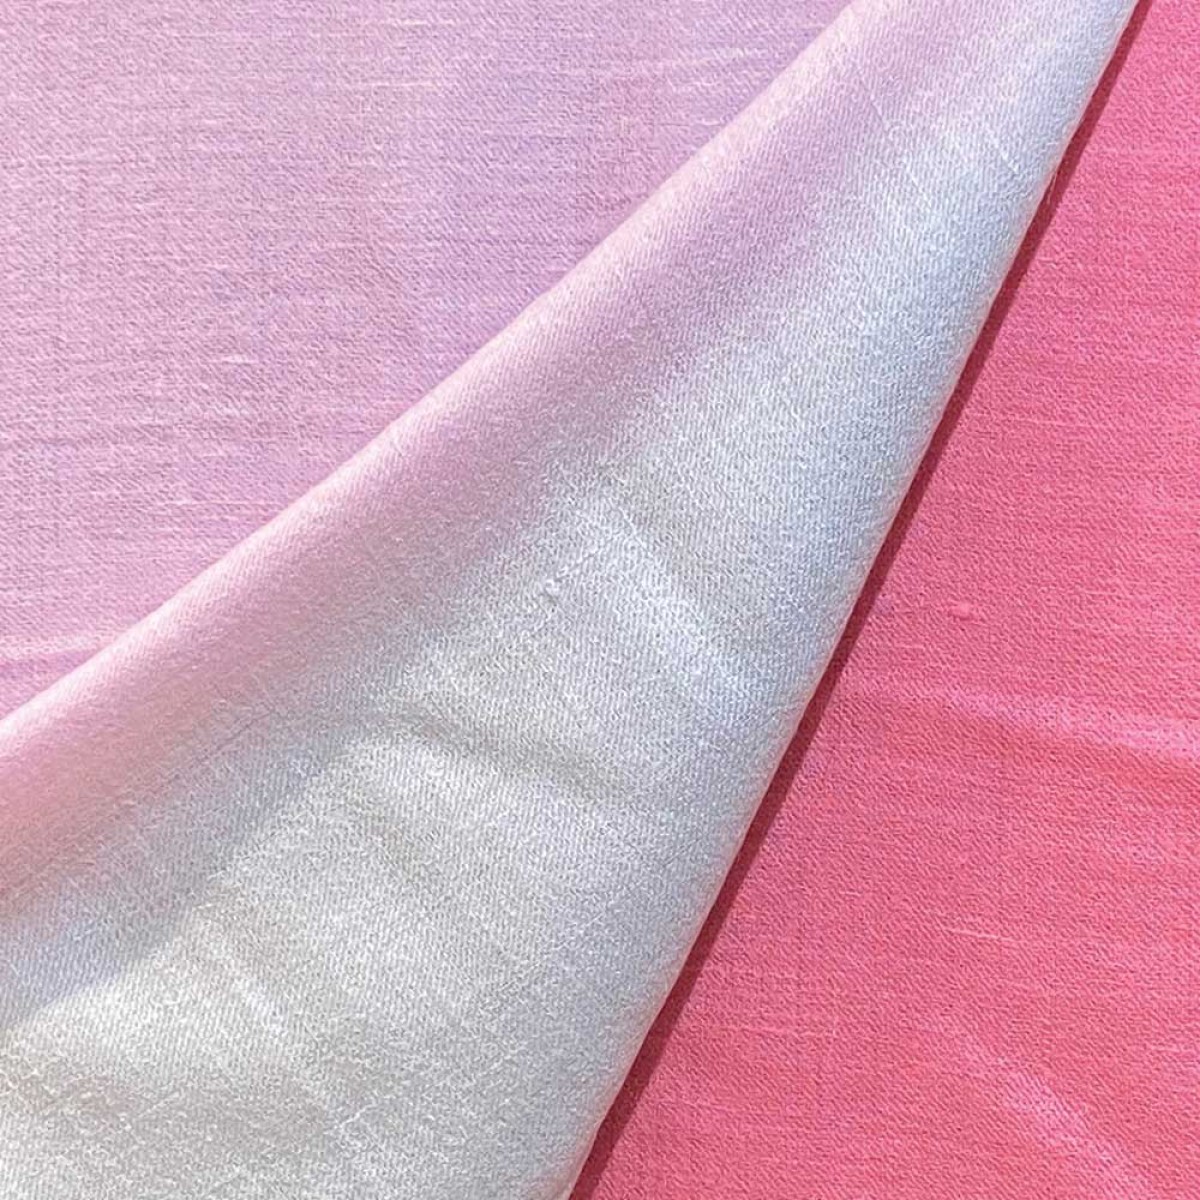 Ombre Pashmina Shawl - Pink & Light Grey